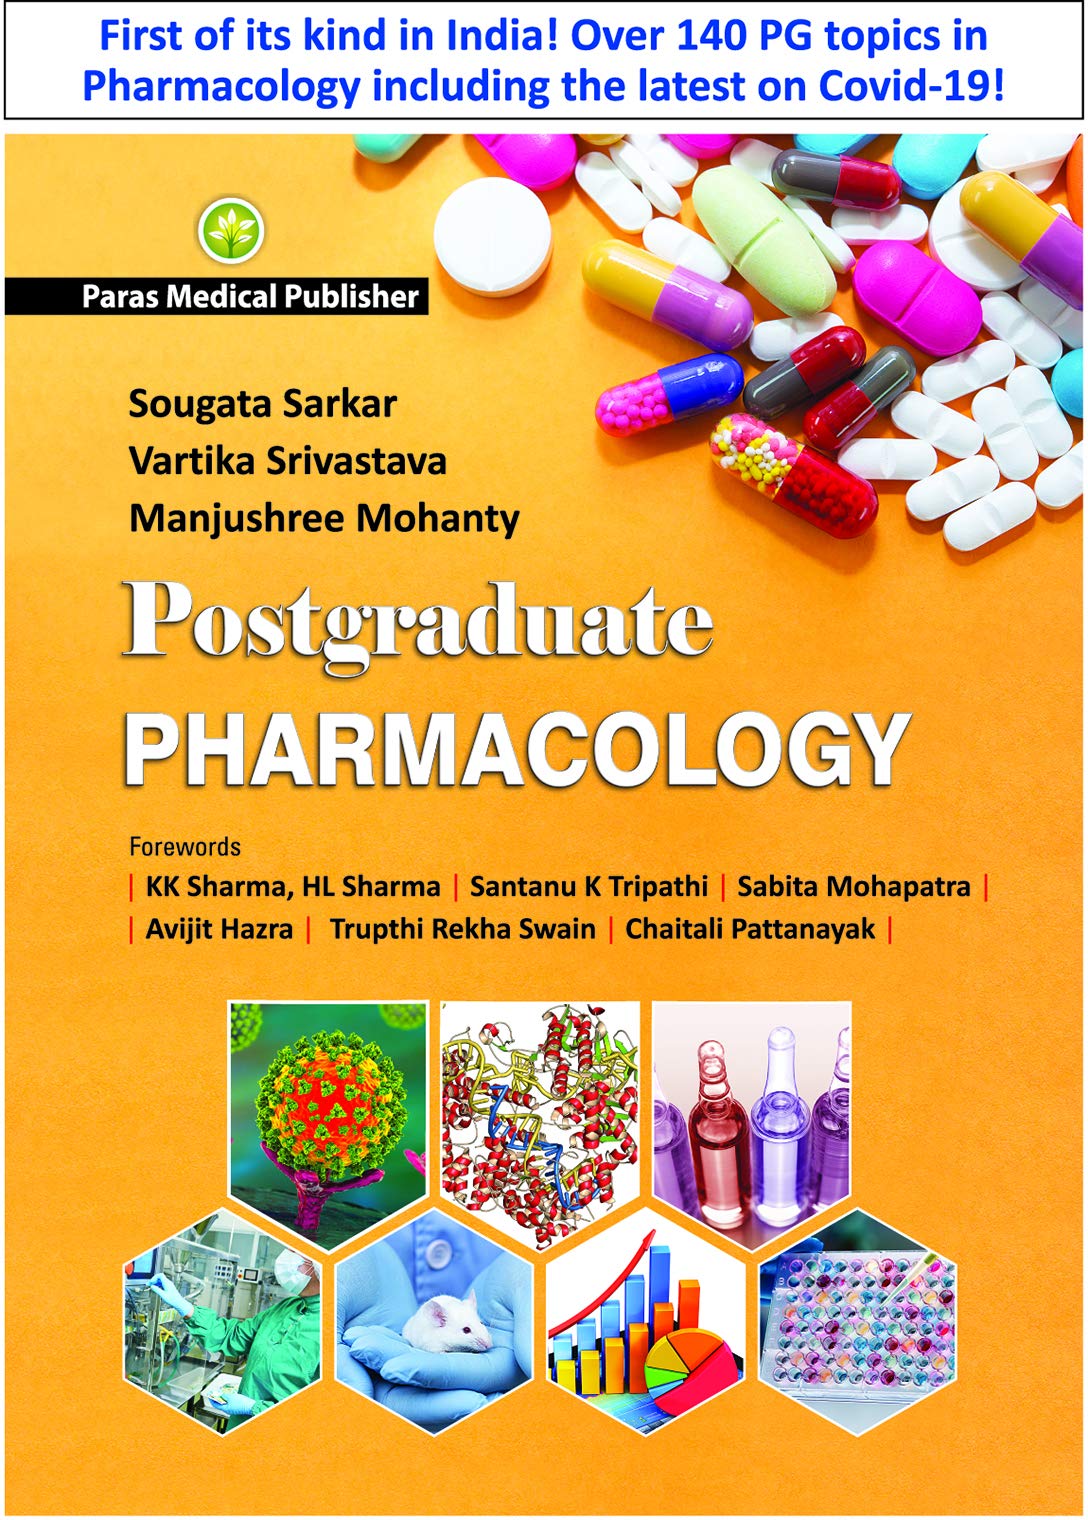 Postgraduate Pharmacology